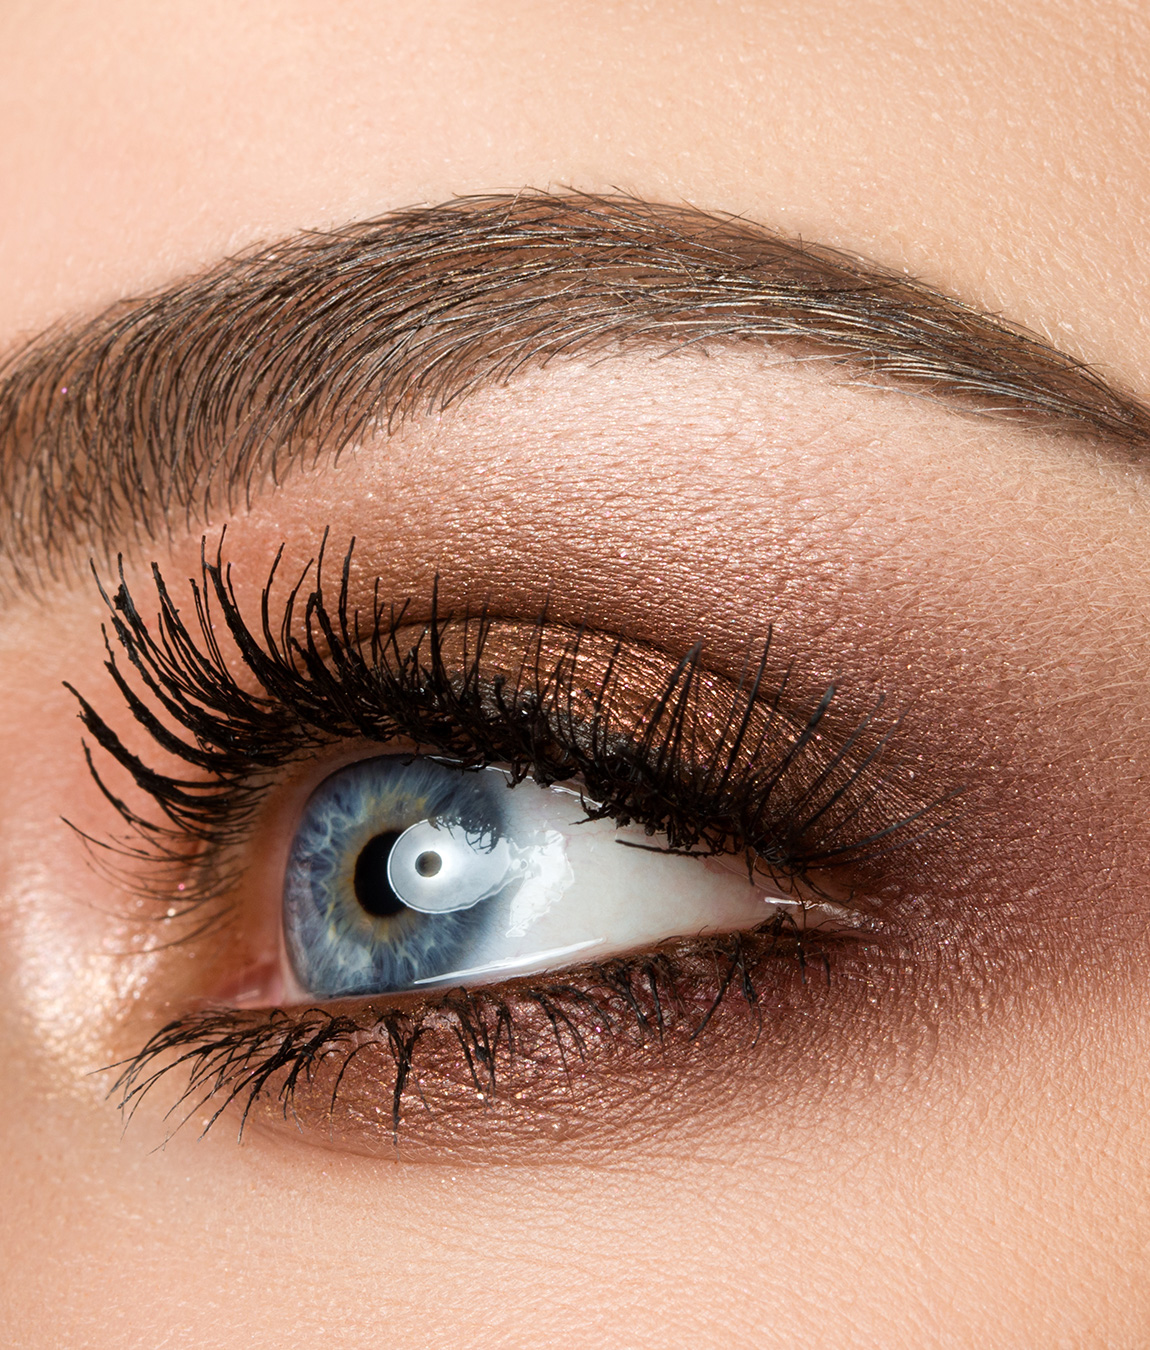 Permanent makeup around a woman's eye